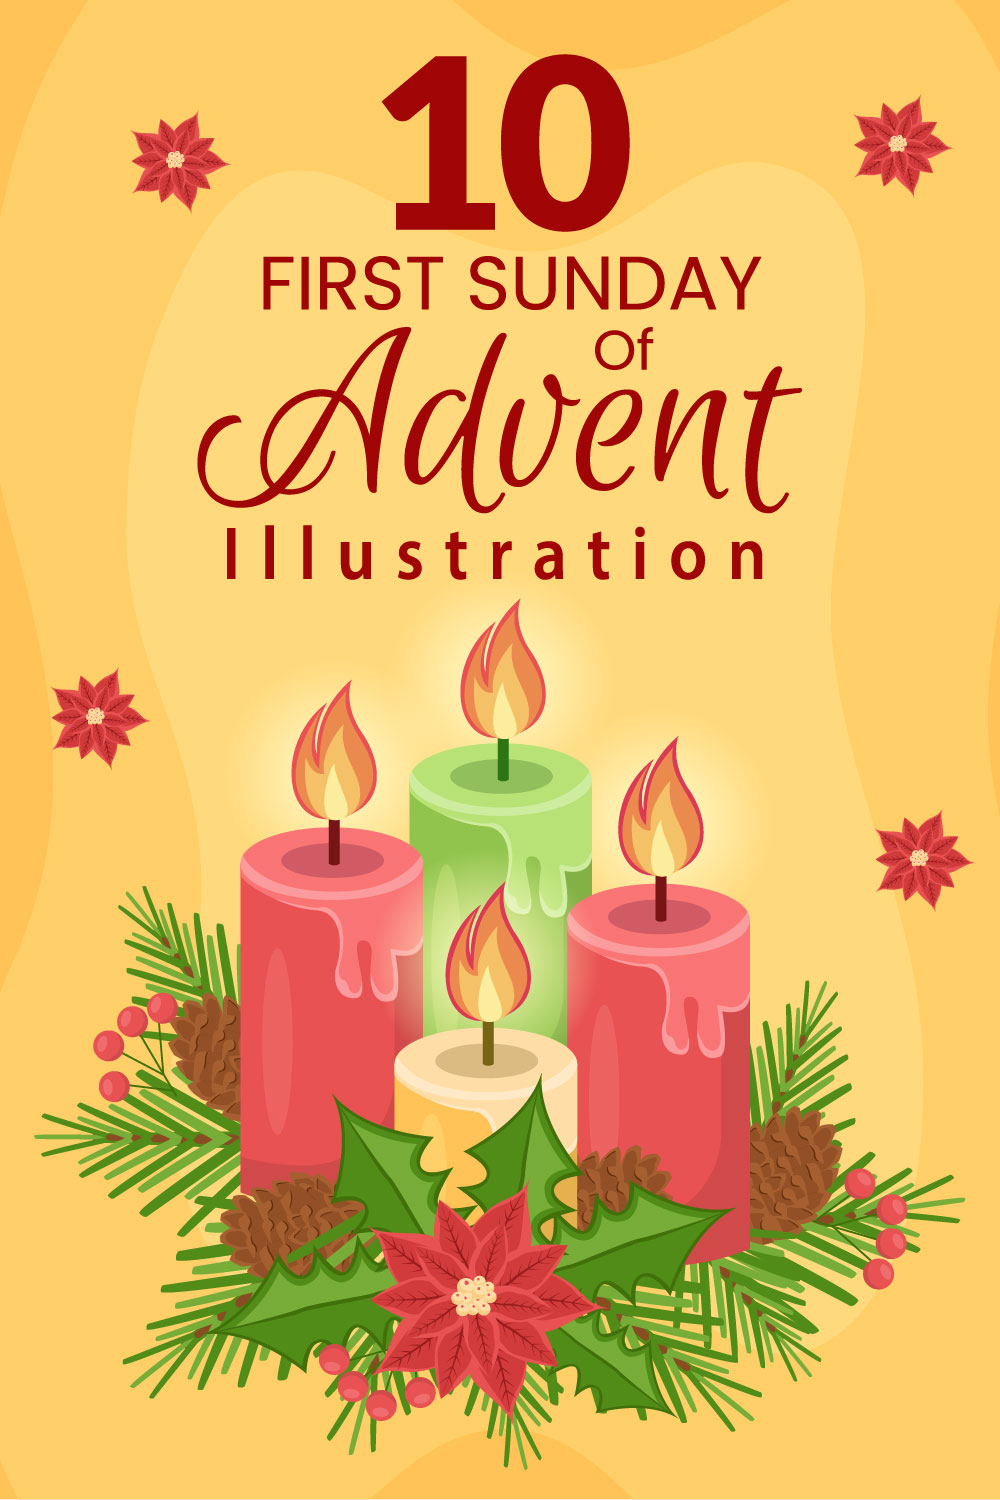 10 First Sunday of Advent Illustration pinterest image.